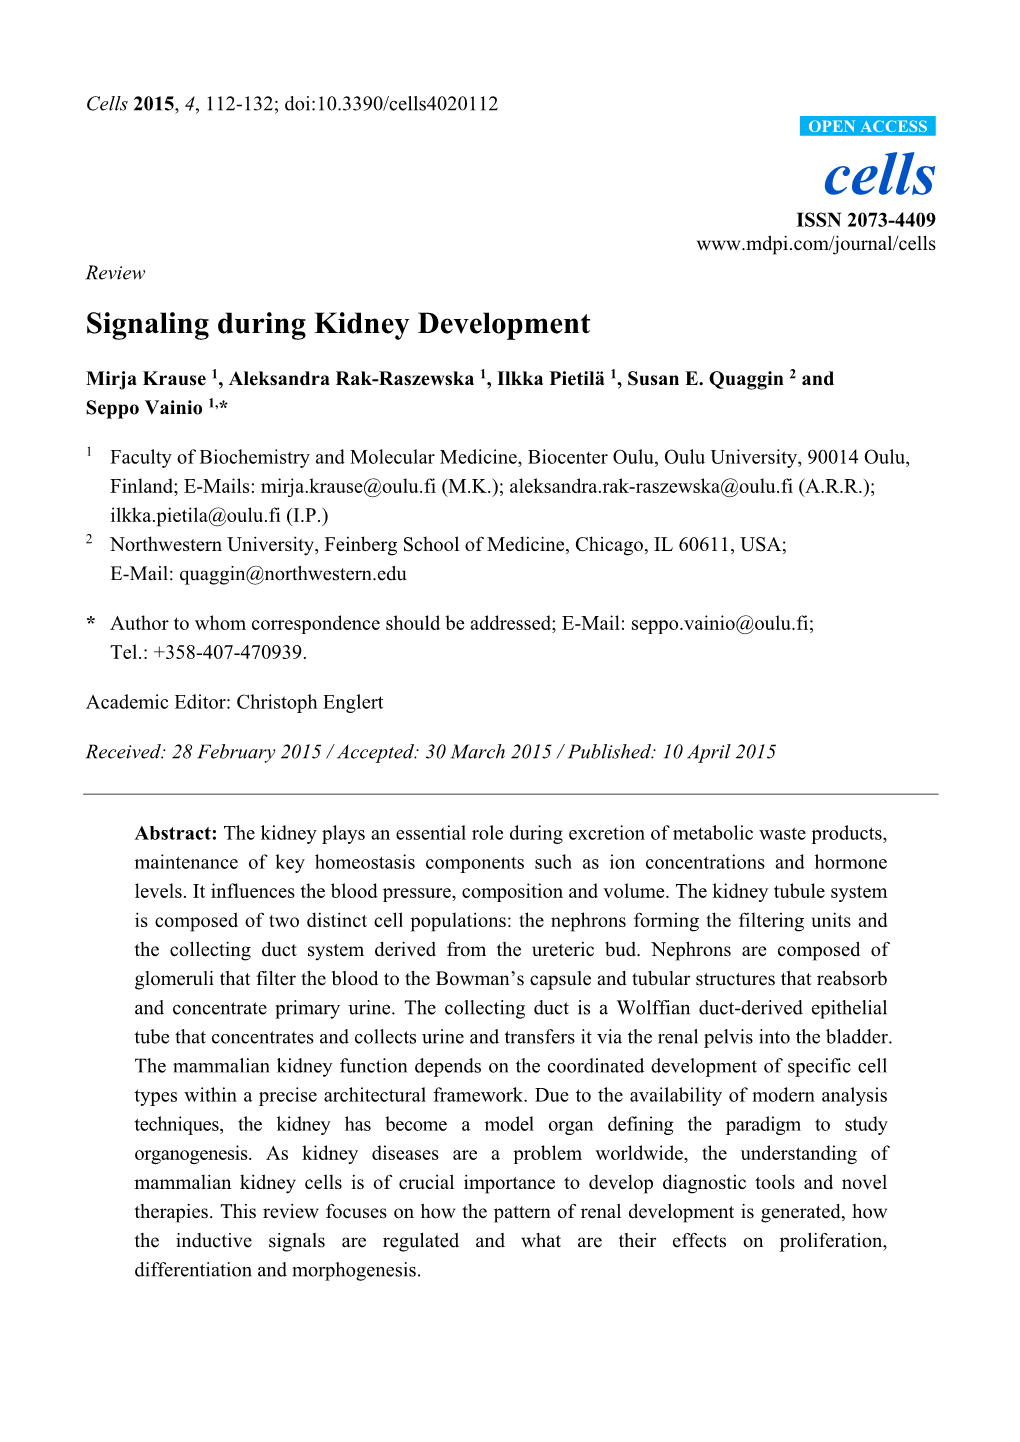 Signaling During Kidney Development